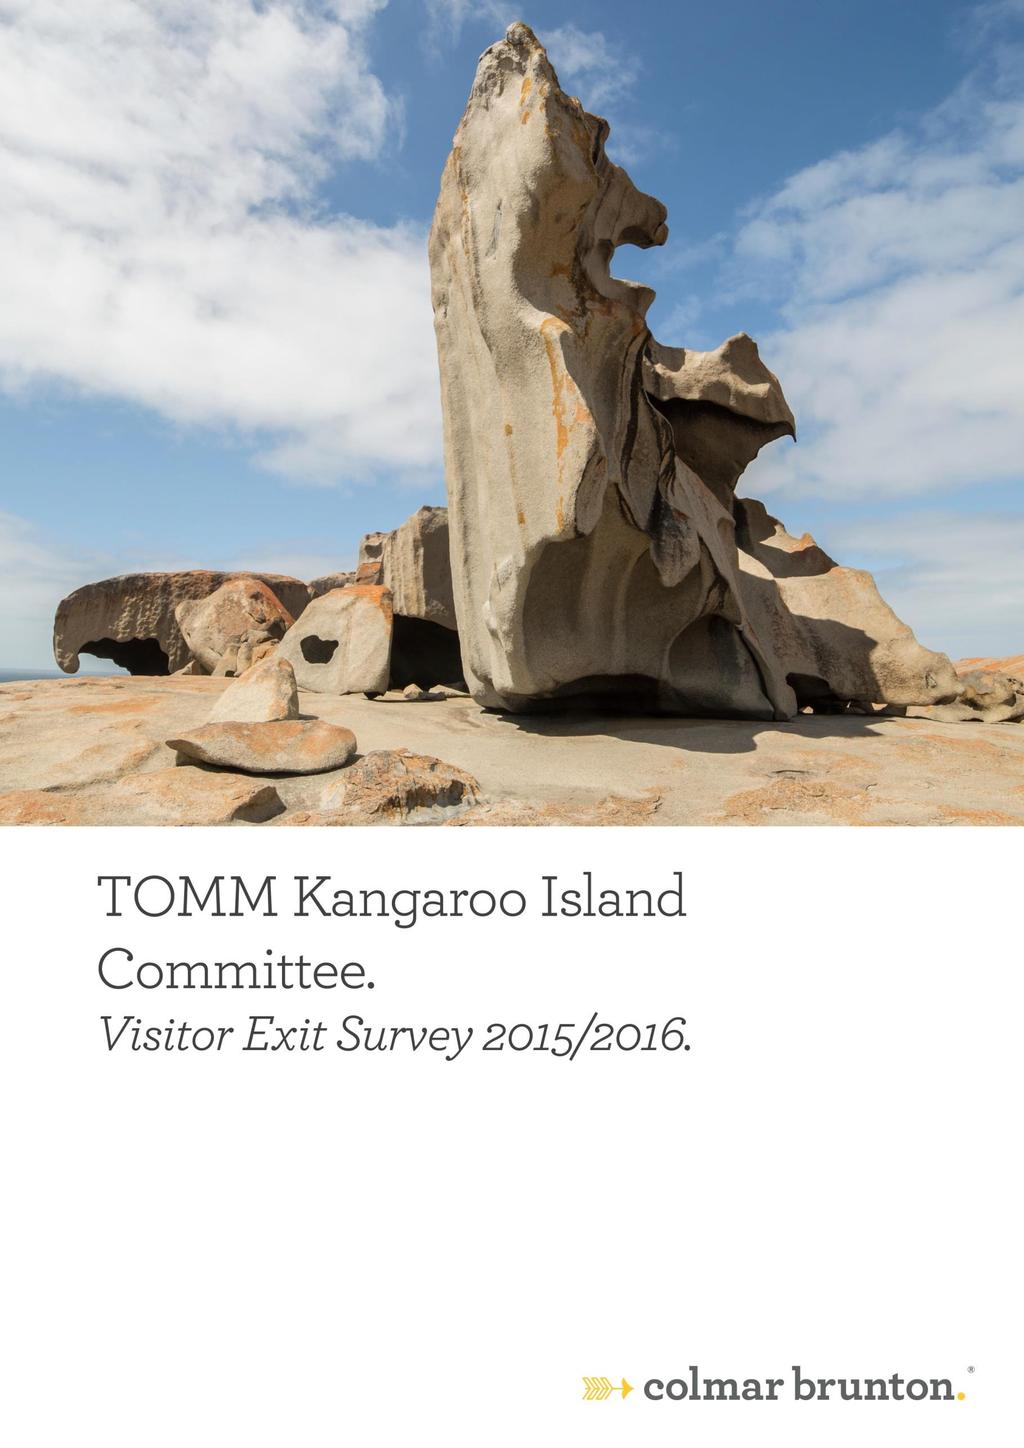 Prepared for: TOMM Committee Kangaroo Island CB Contact: Naomi Downer, Account Director Phone: (08) 8373 3822